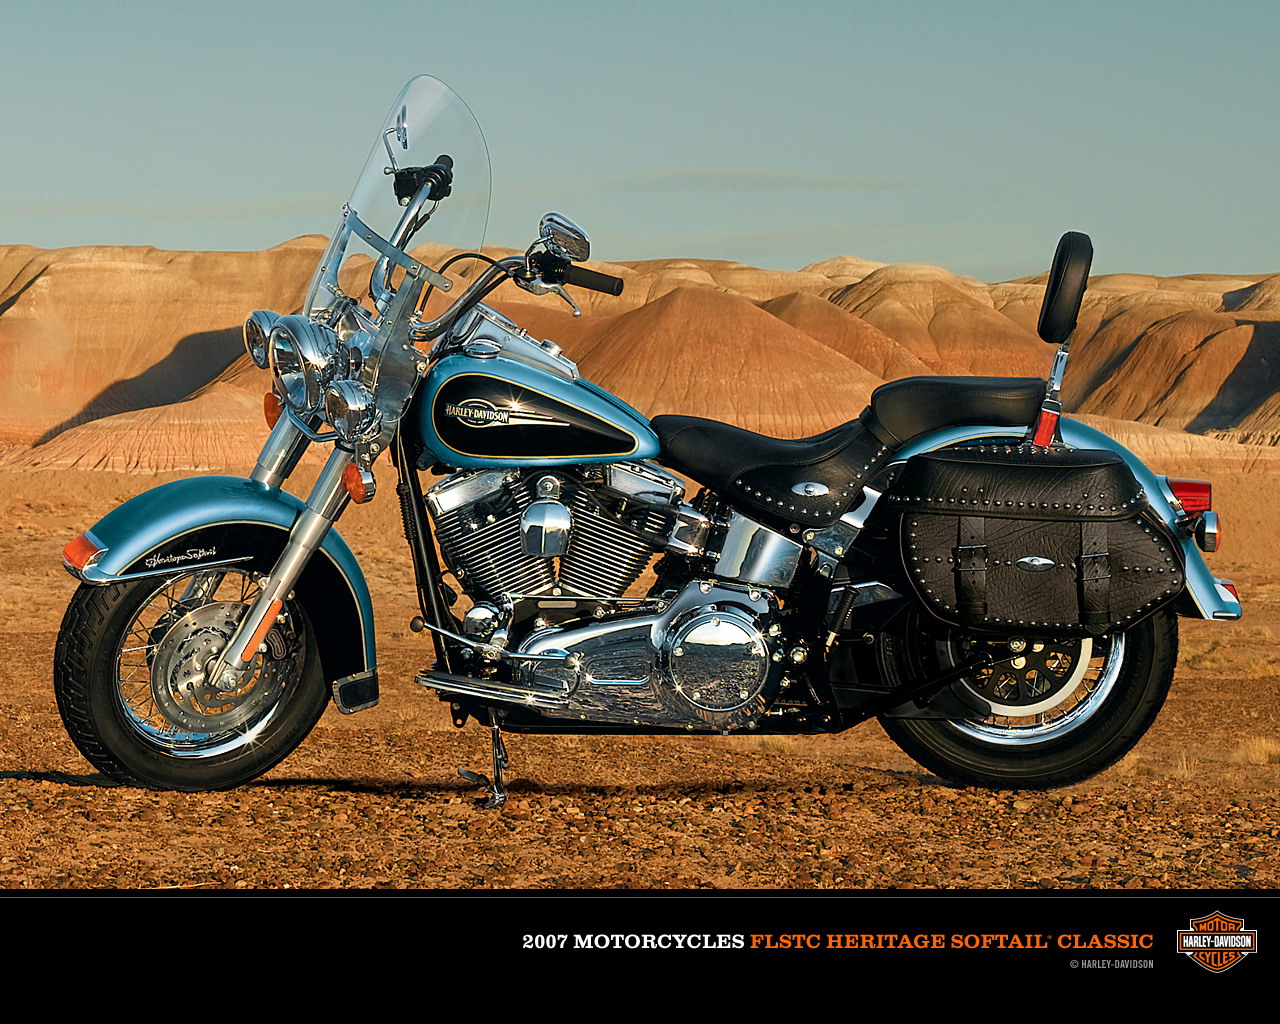 Wallpaper Harley Davidson